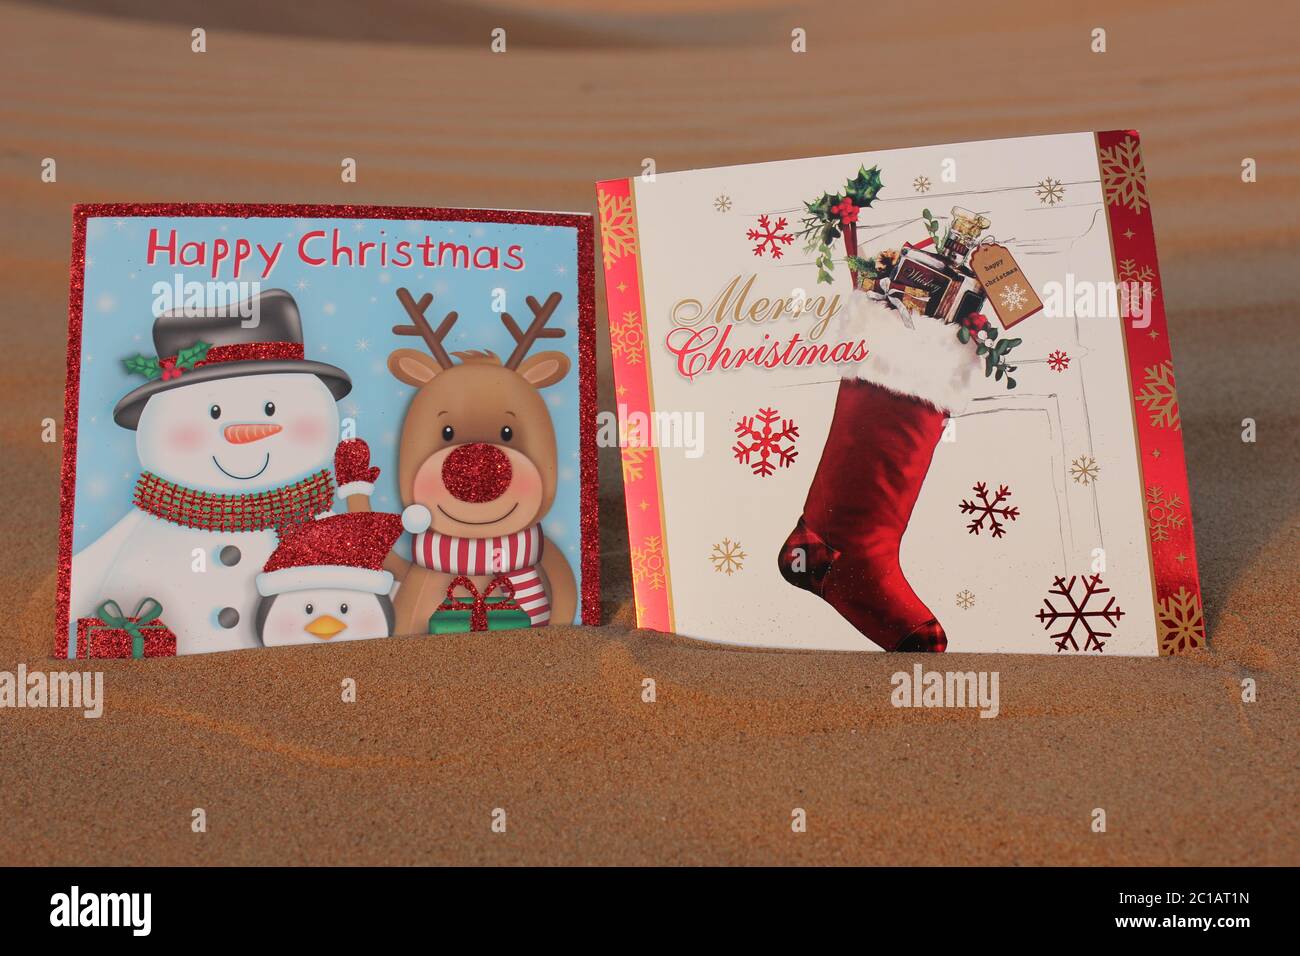 Christmas greeting cards in desert sand dune. Merry Christmas/Happy ...